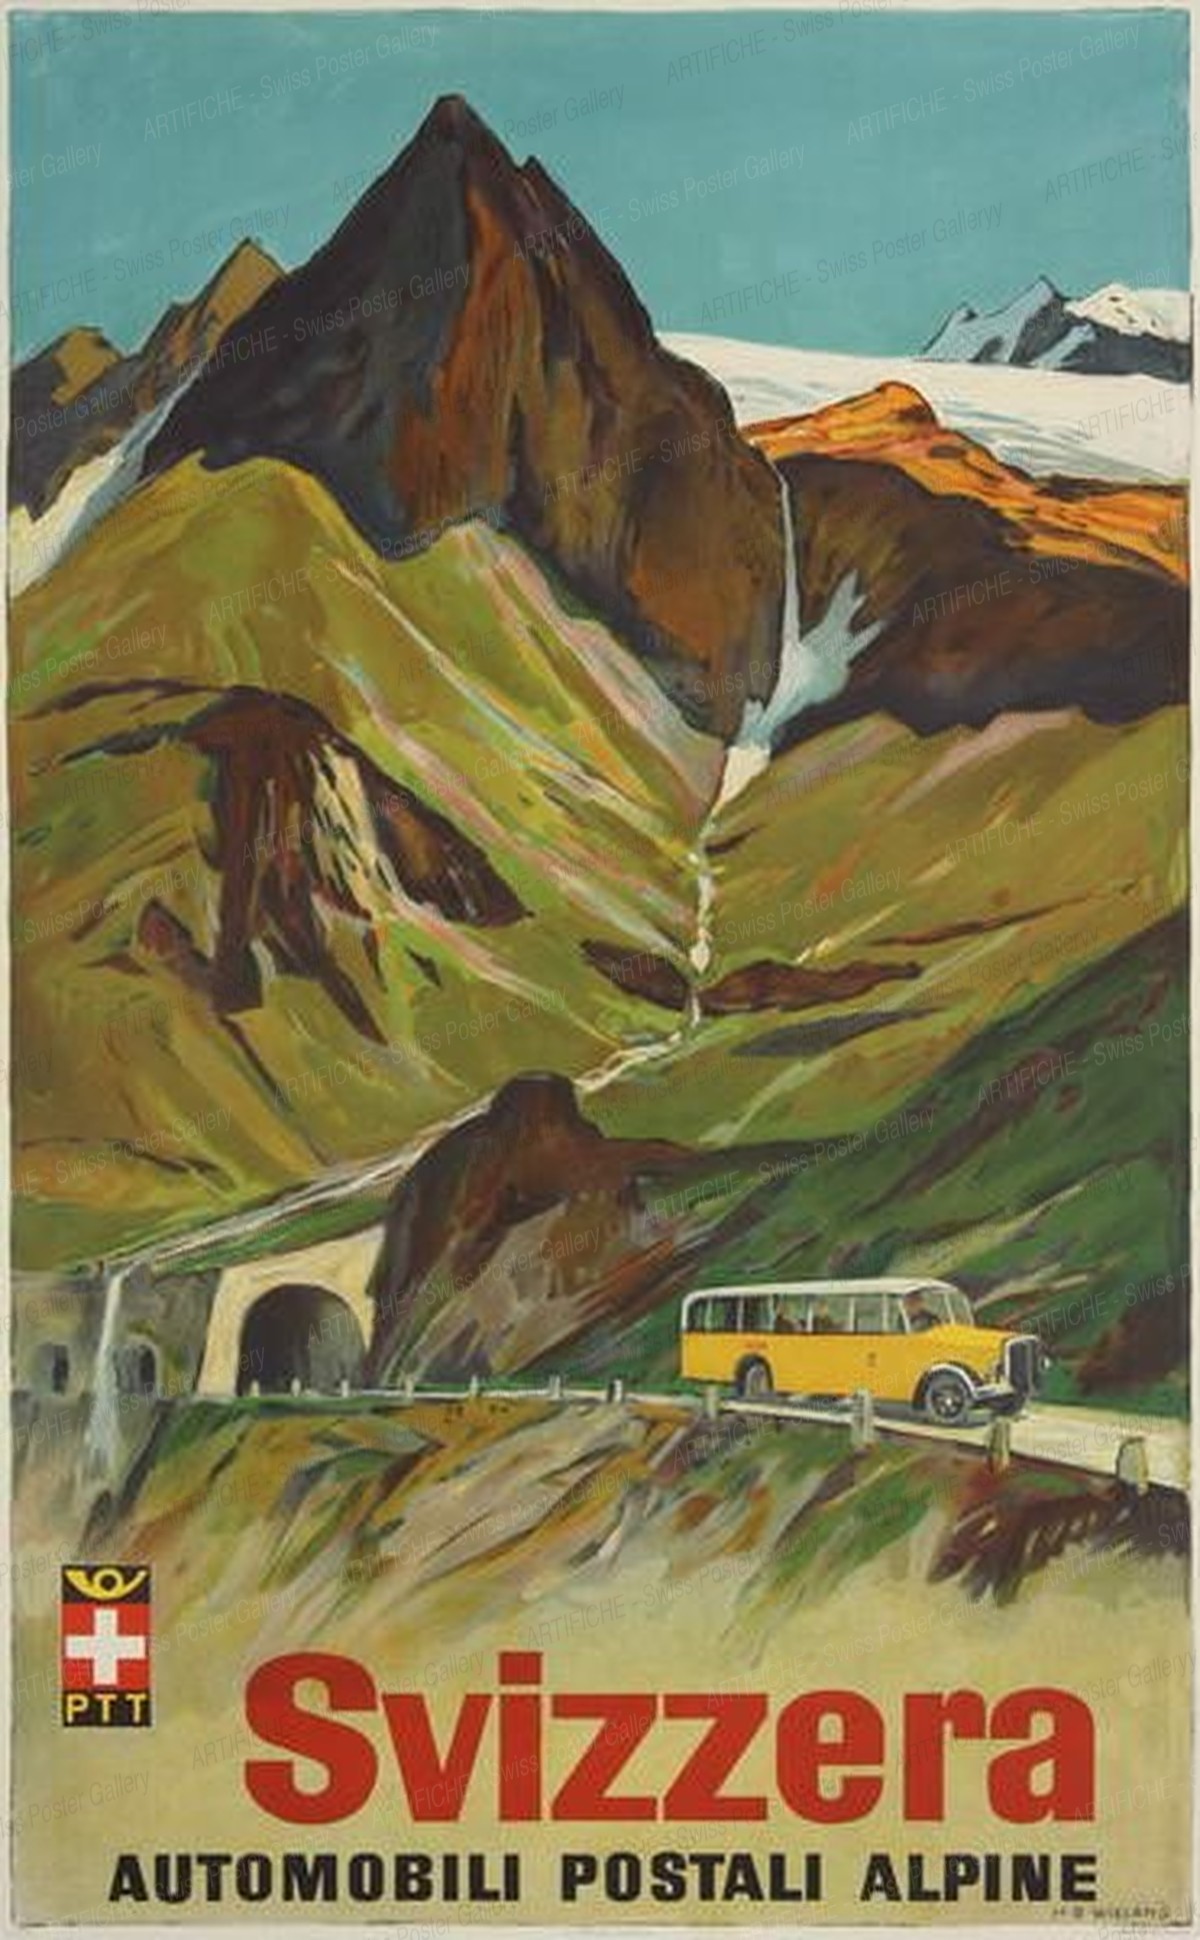 Svizzera – Automobili postali alpine, Hans Beat Wieland